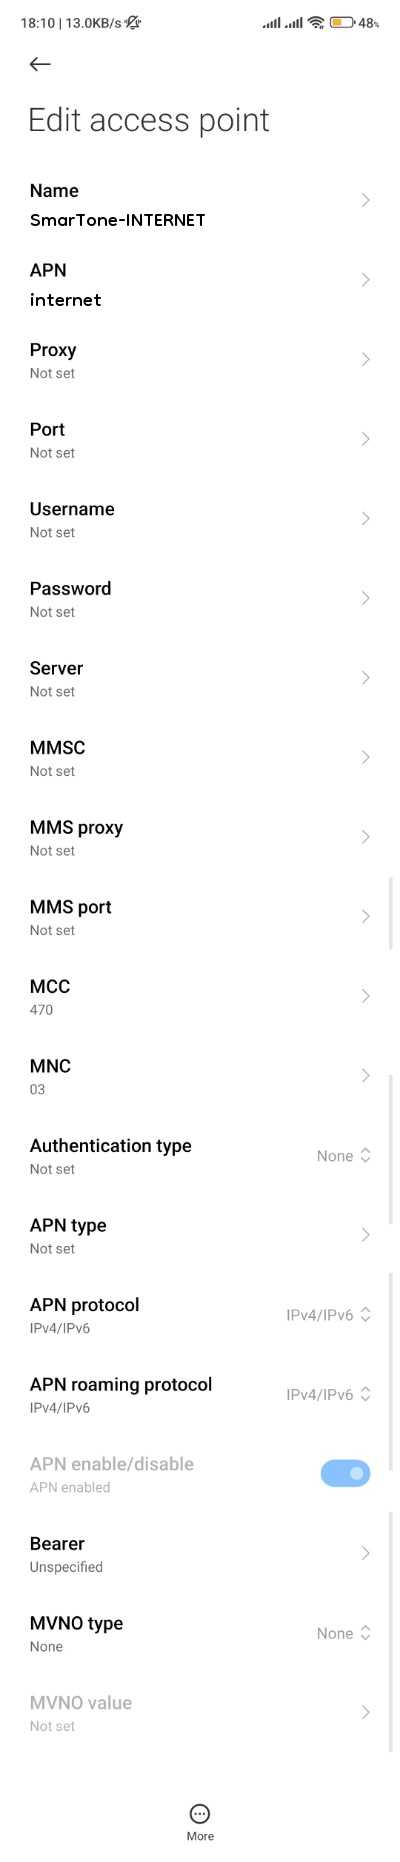 SmarTone Macau APN Setiings for Android iPhone 3G 4G Internet